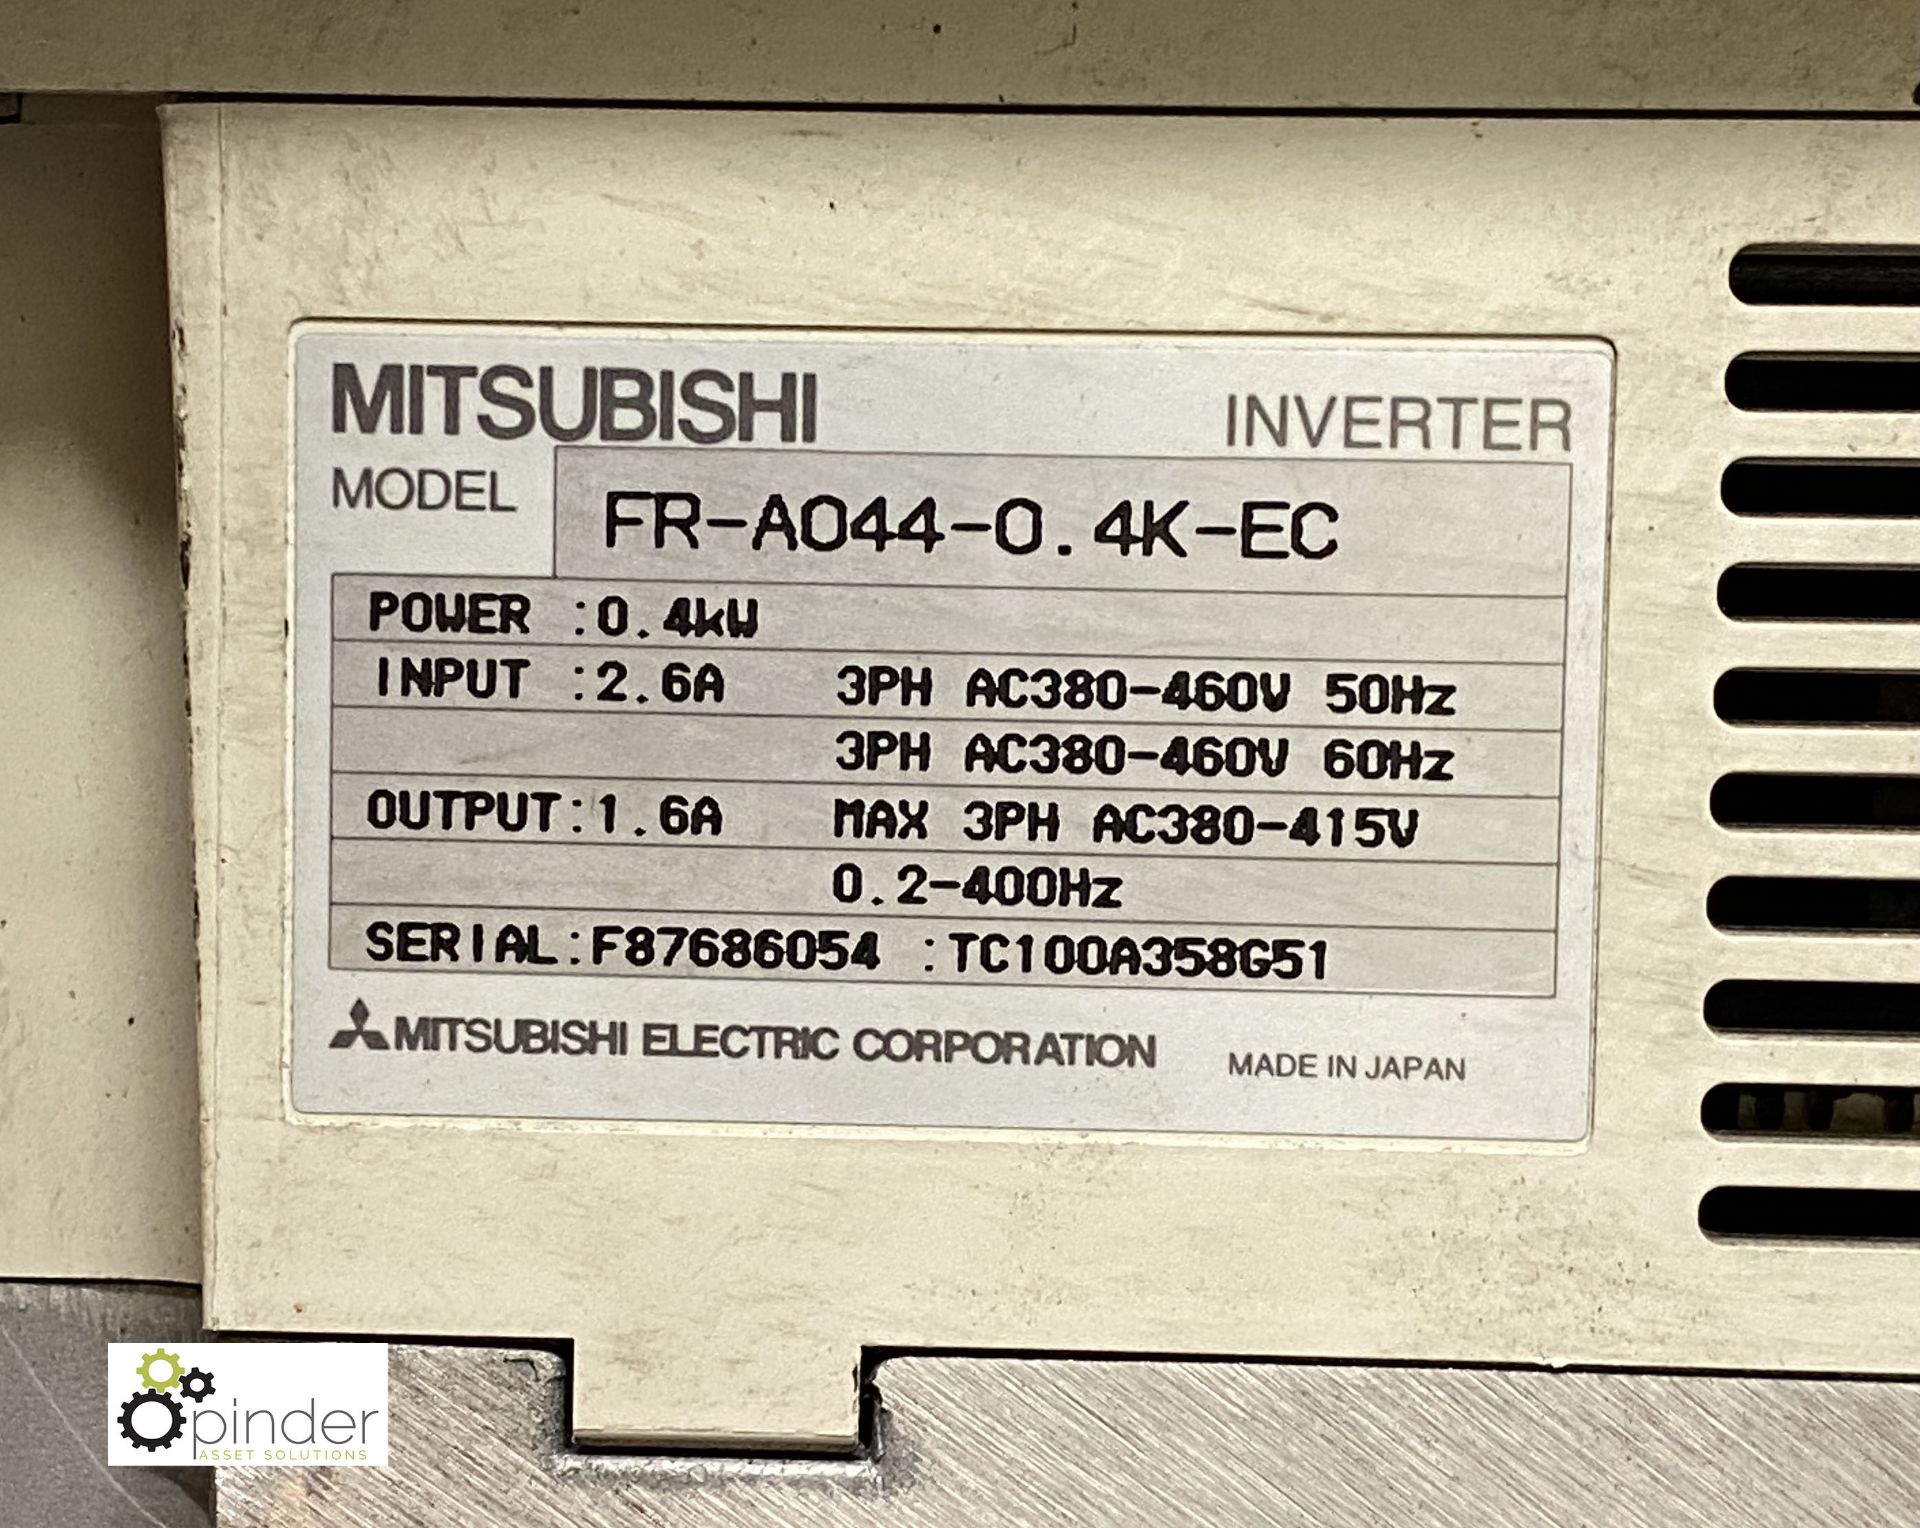 Mitsubishi FR-A044 Inverter - Image 2 of 2